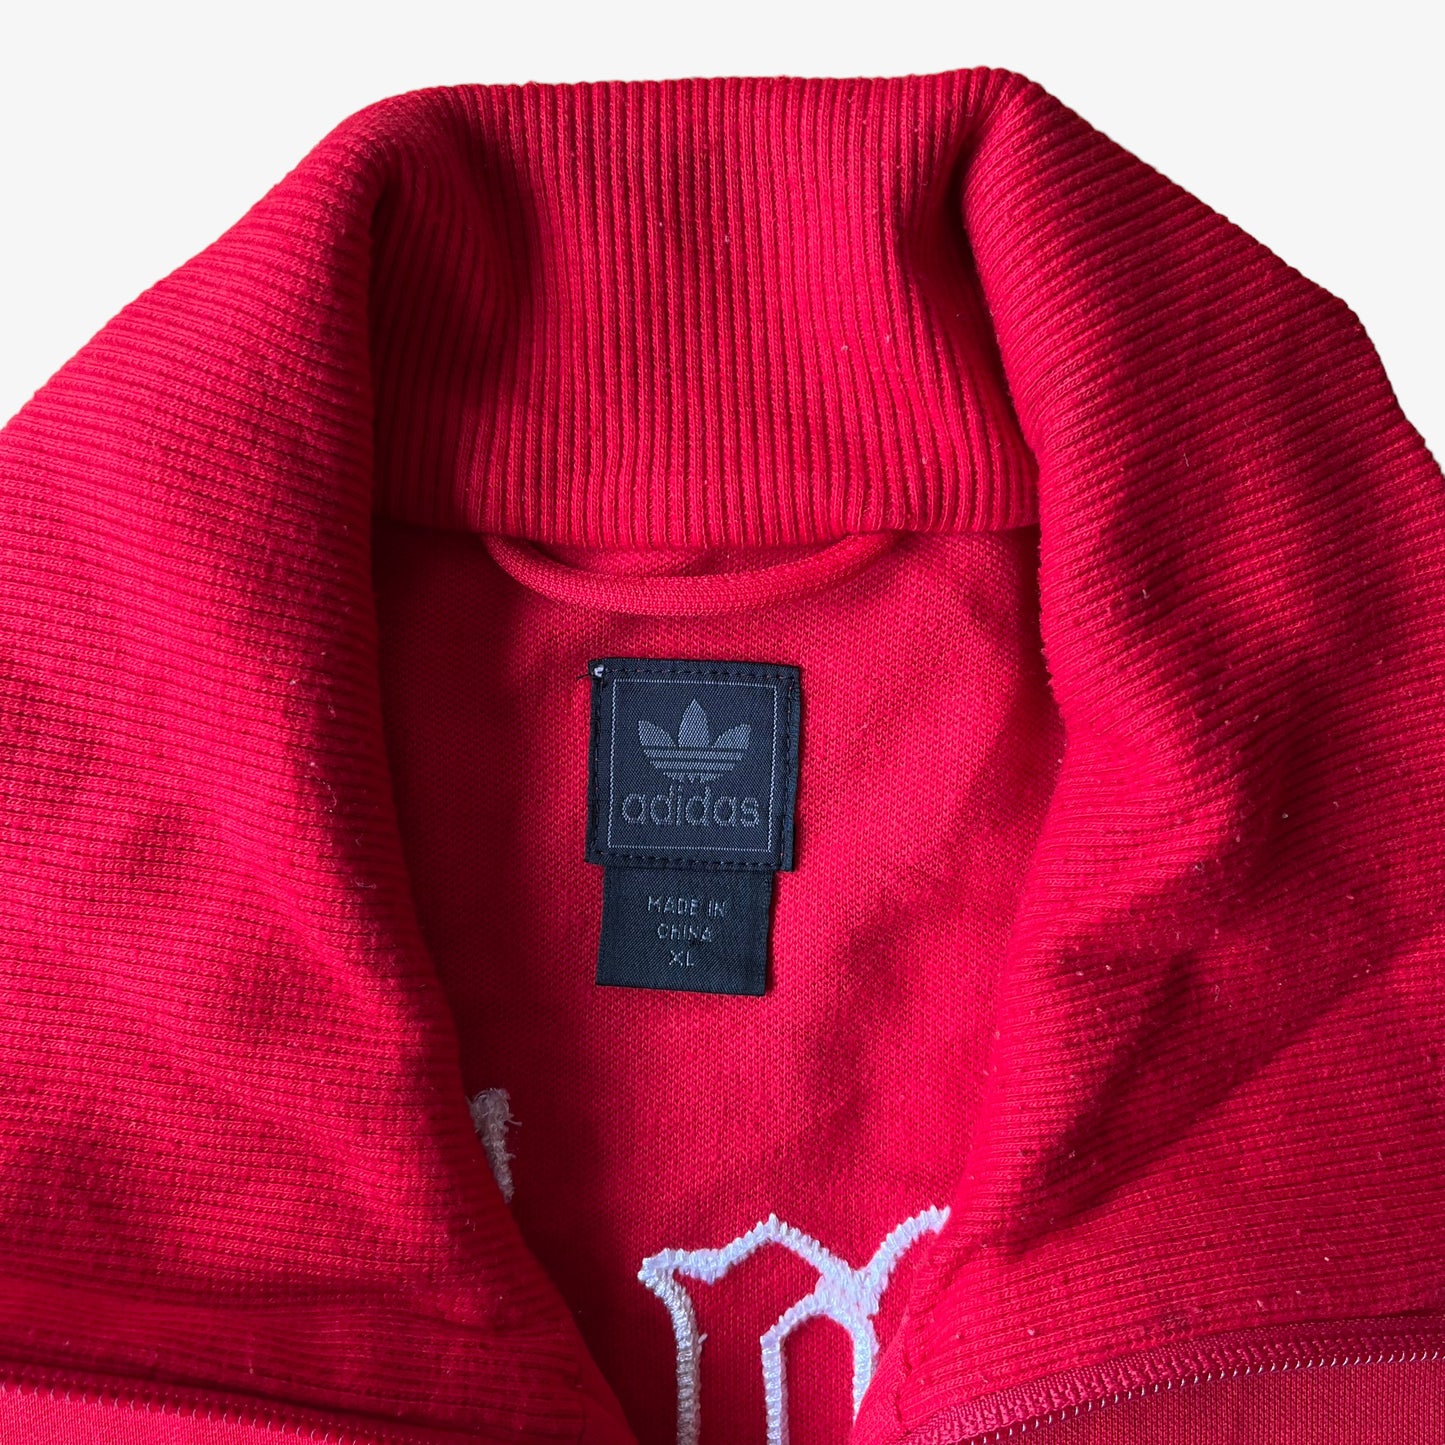 Vintage Y2K Adidas Originals London Olympic Team Jacket Inside Label - Casspios Dream